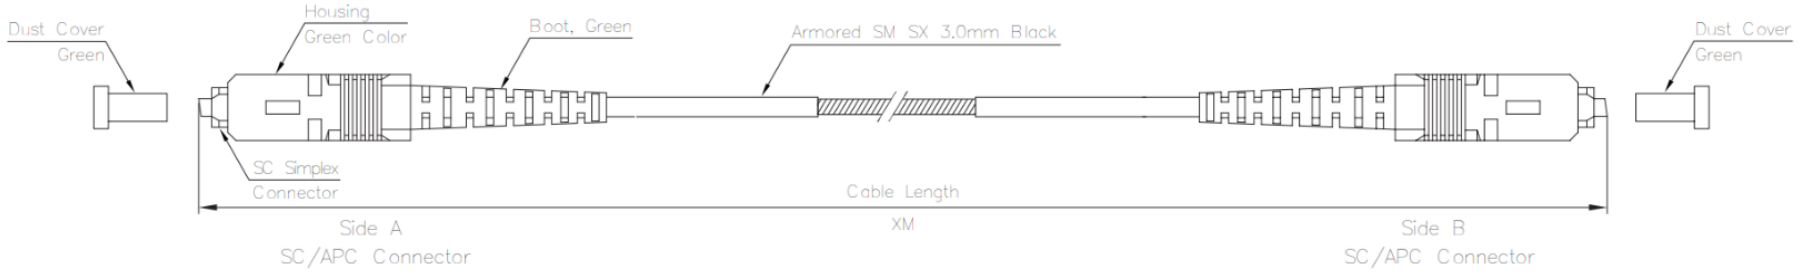 Micro-armored Fiber Patch Cable - SCAPC/SCAPC